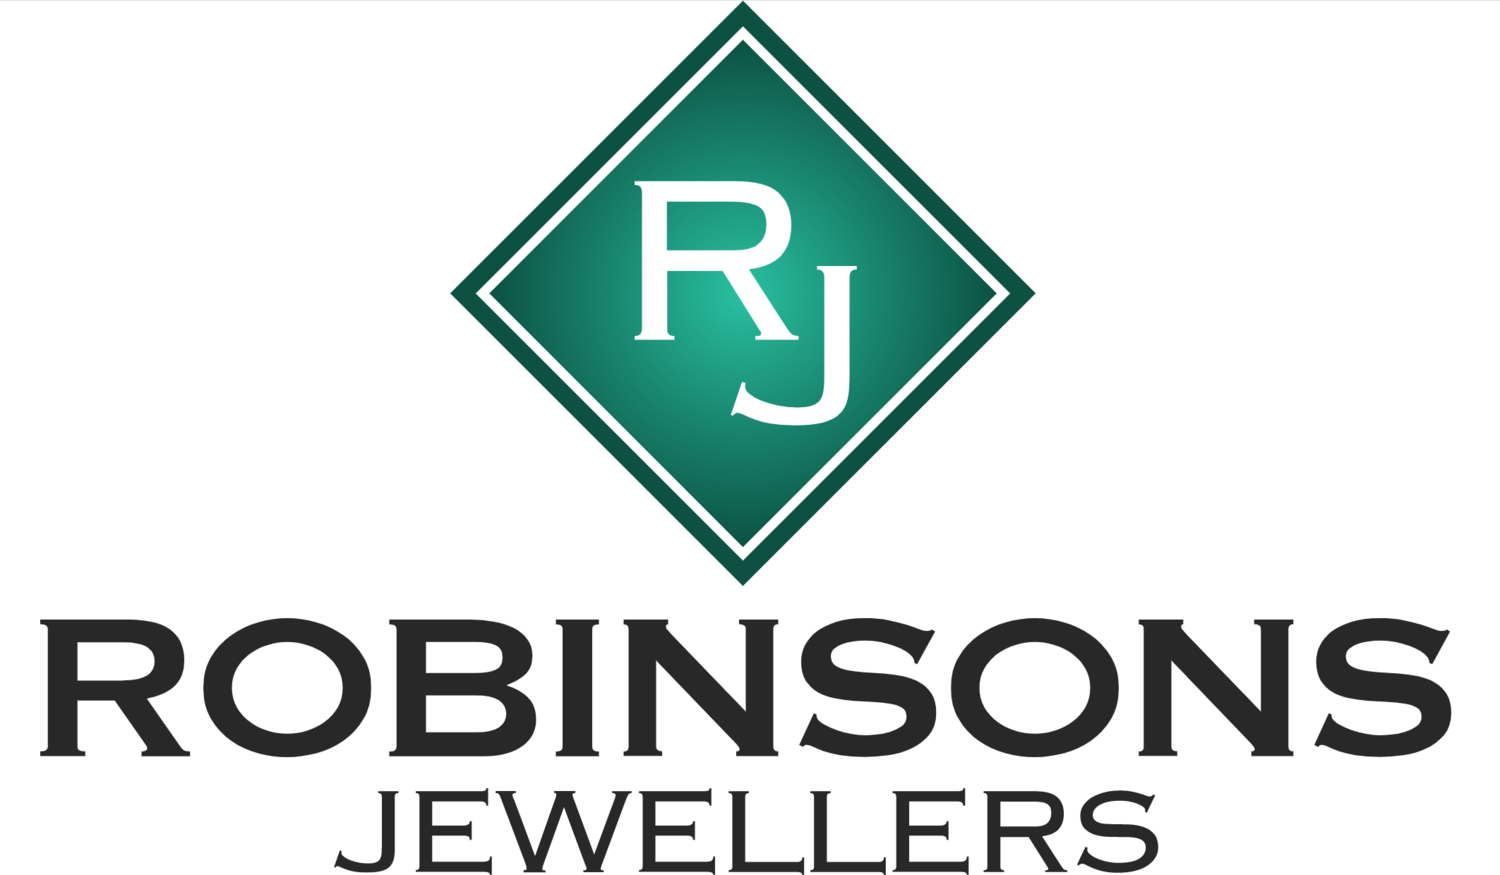 Robinsons Jewellers